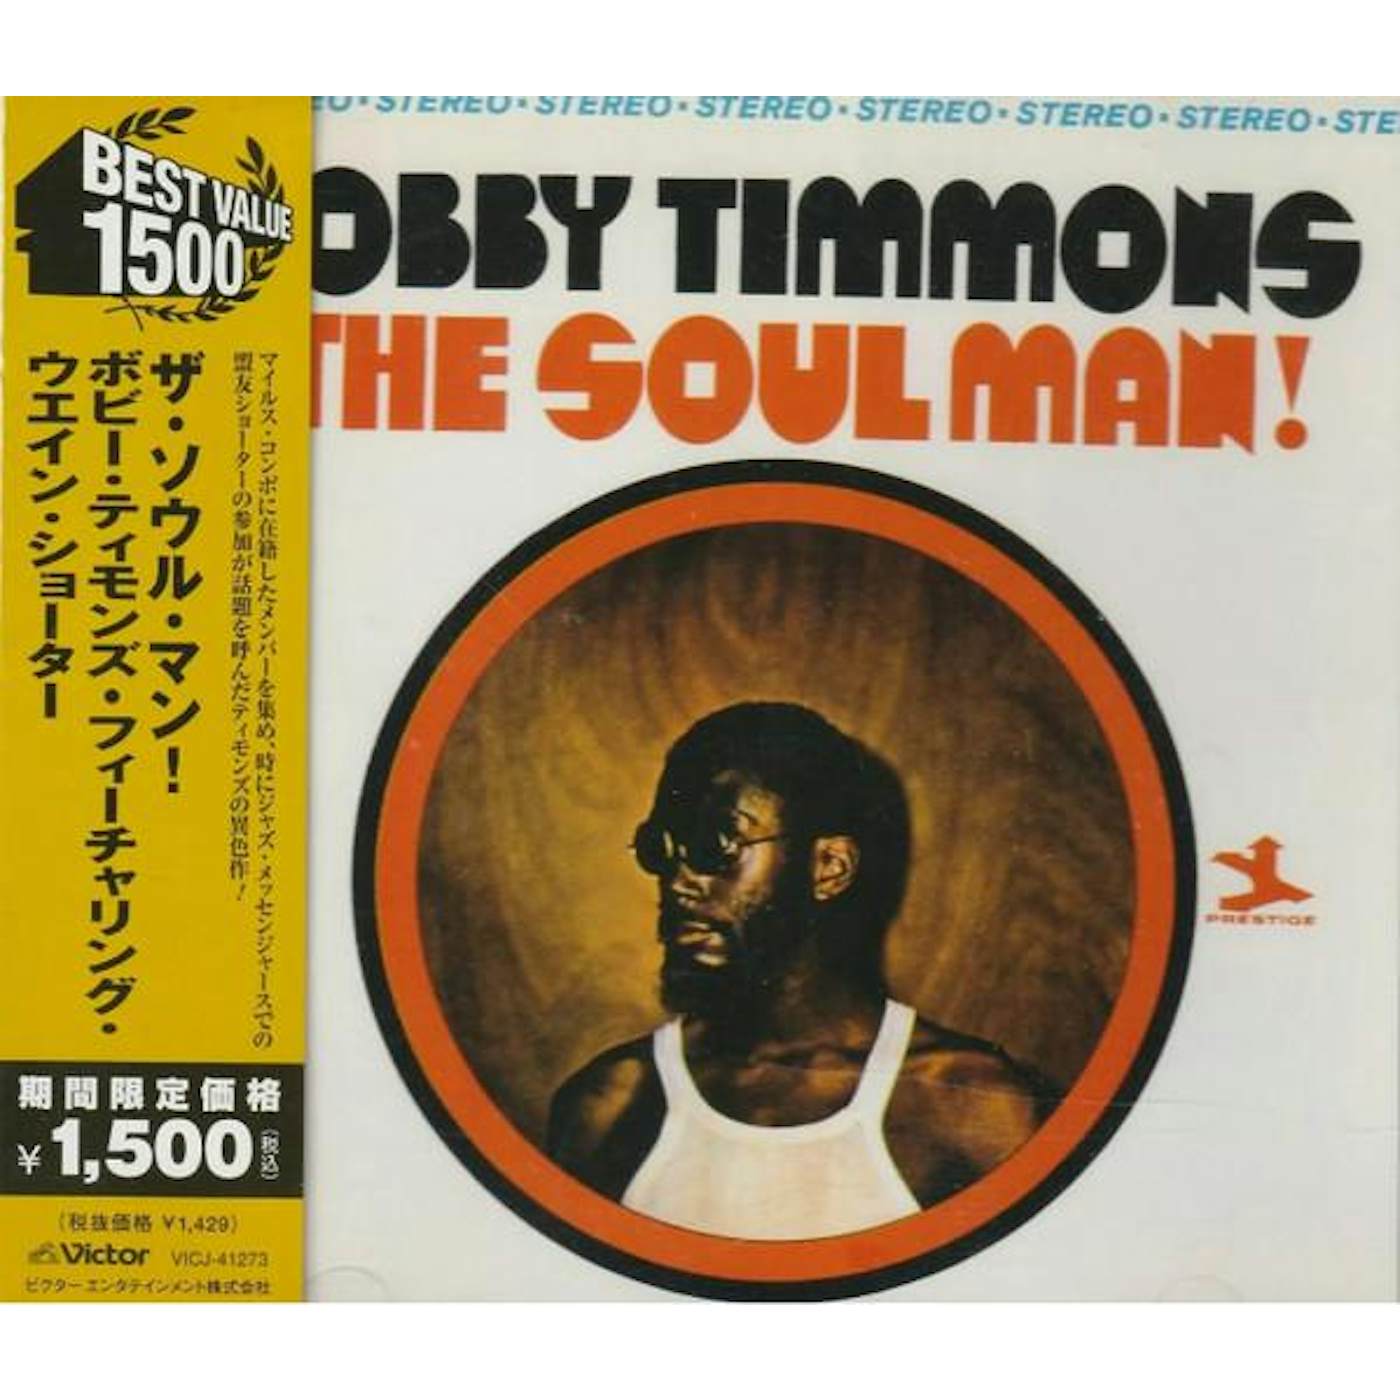 Bobby Timmons SOUL MAN CD